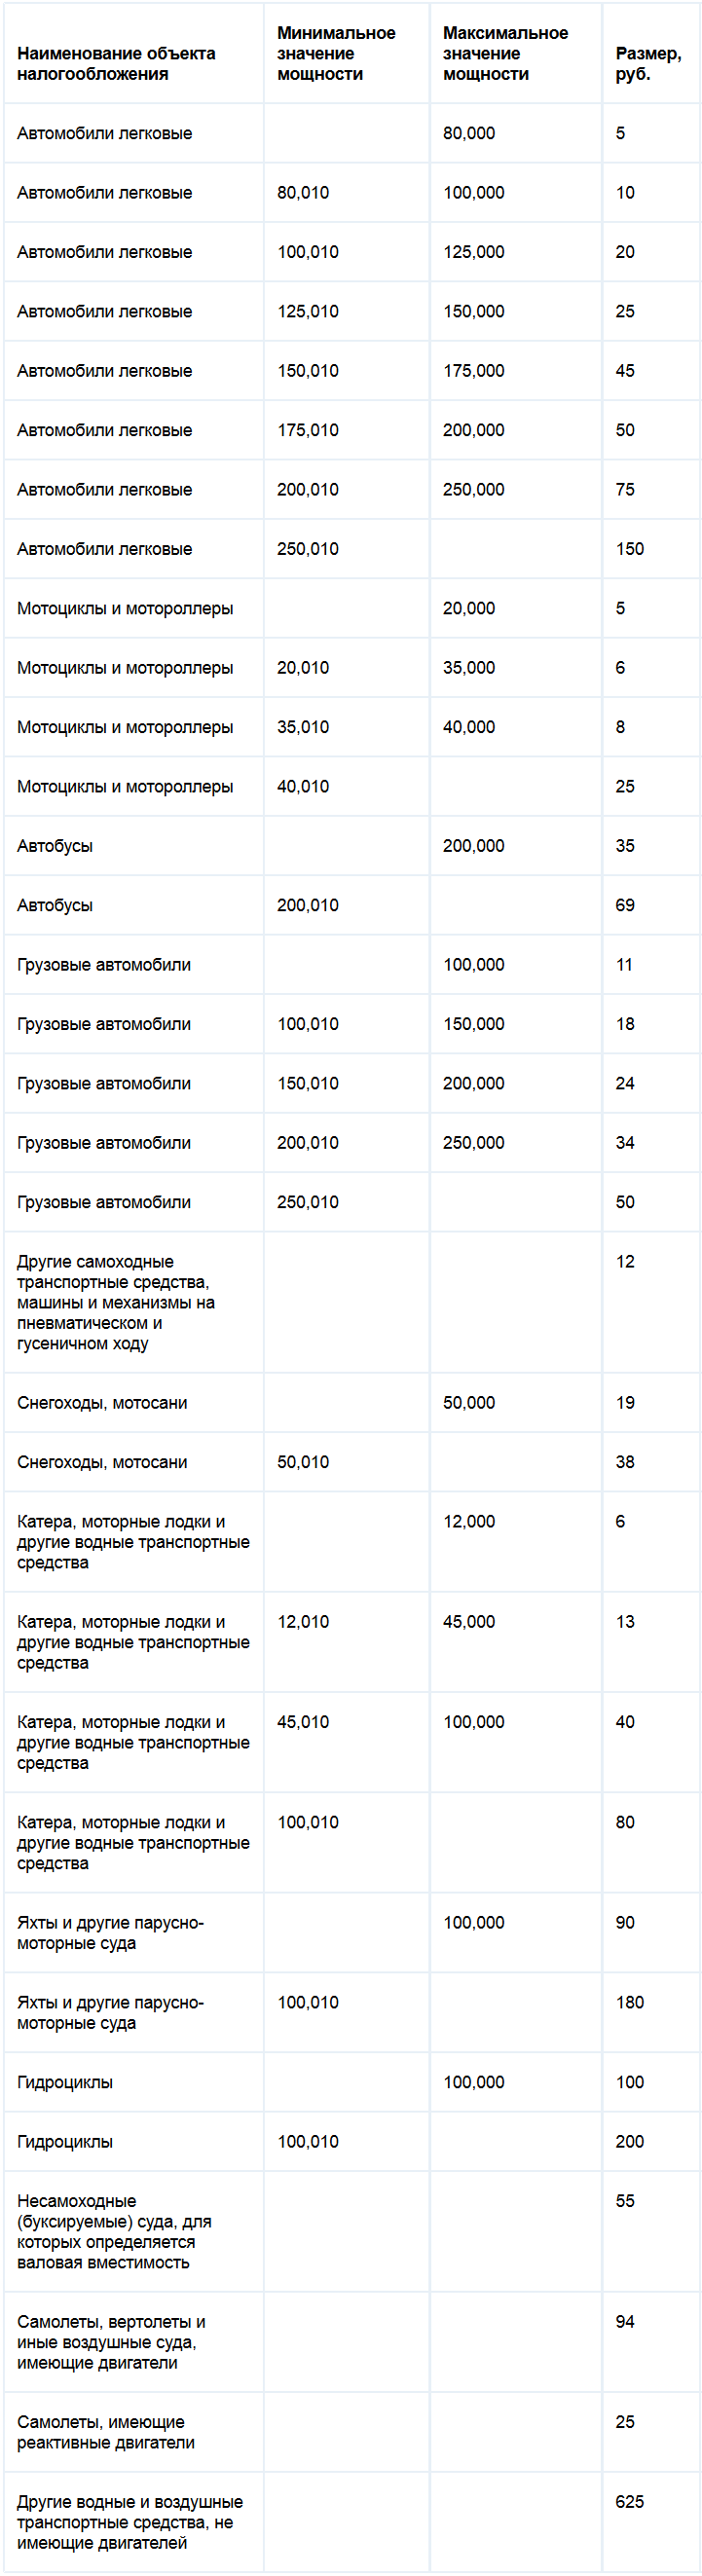 Ставки транспортного налога Калужской области